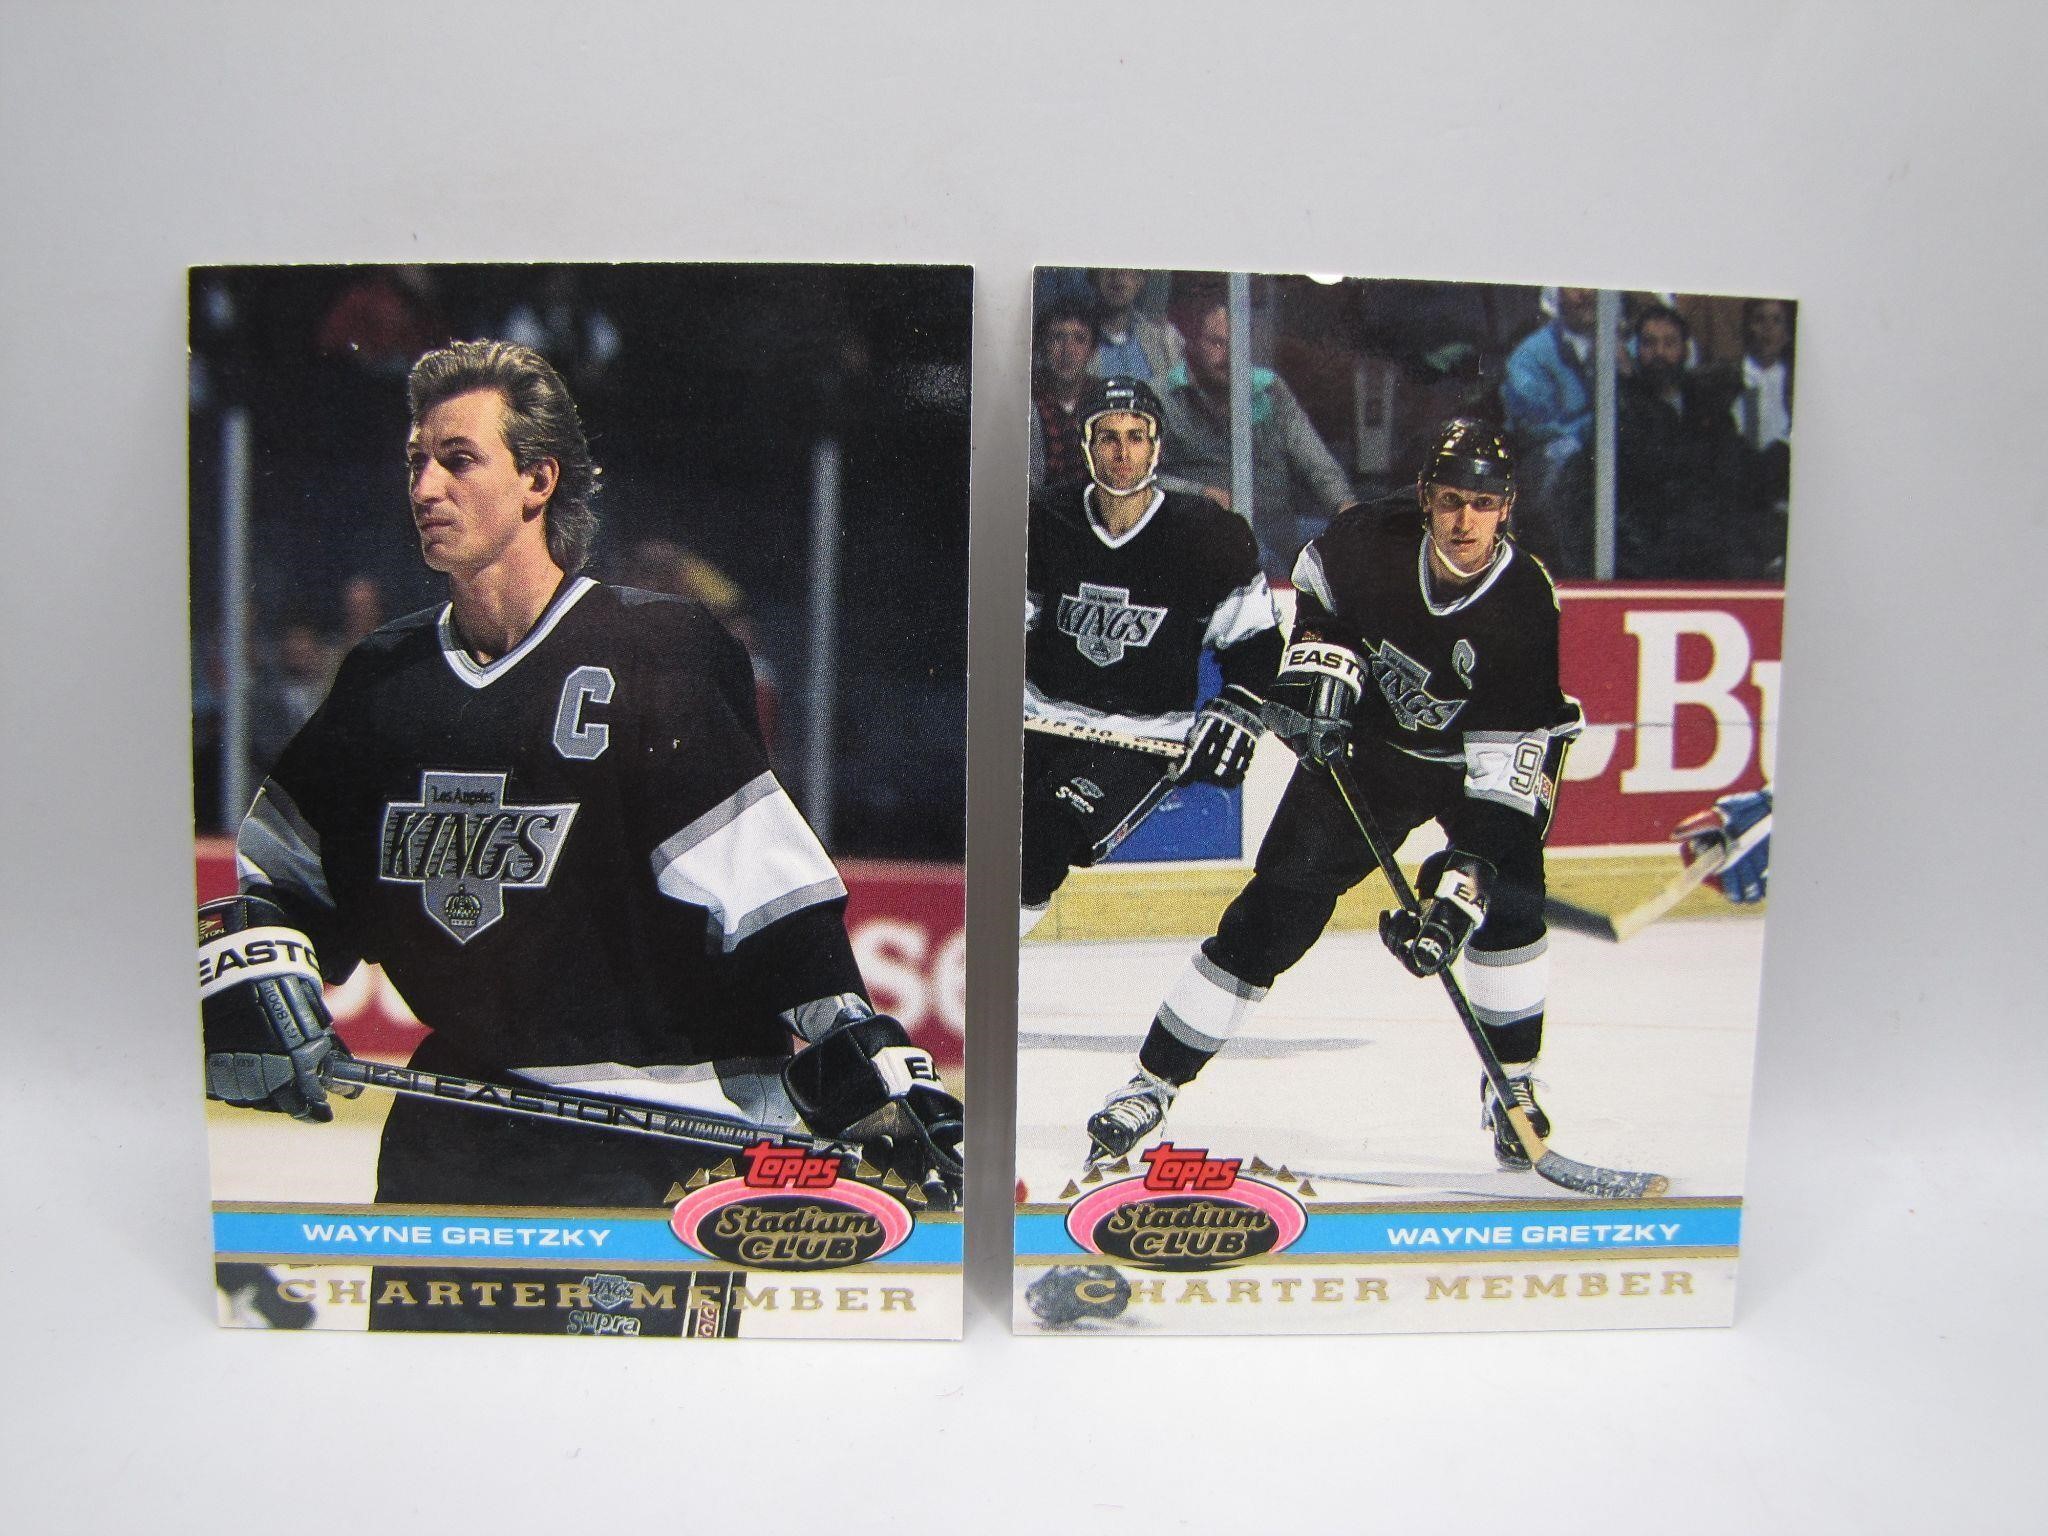 Pair of 1991 Wayne Gretzky Hockey Card